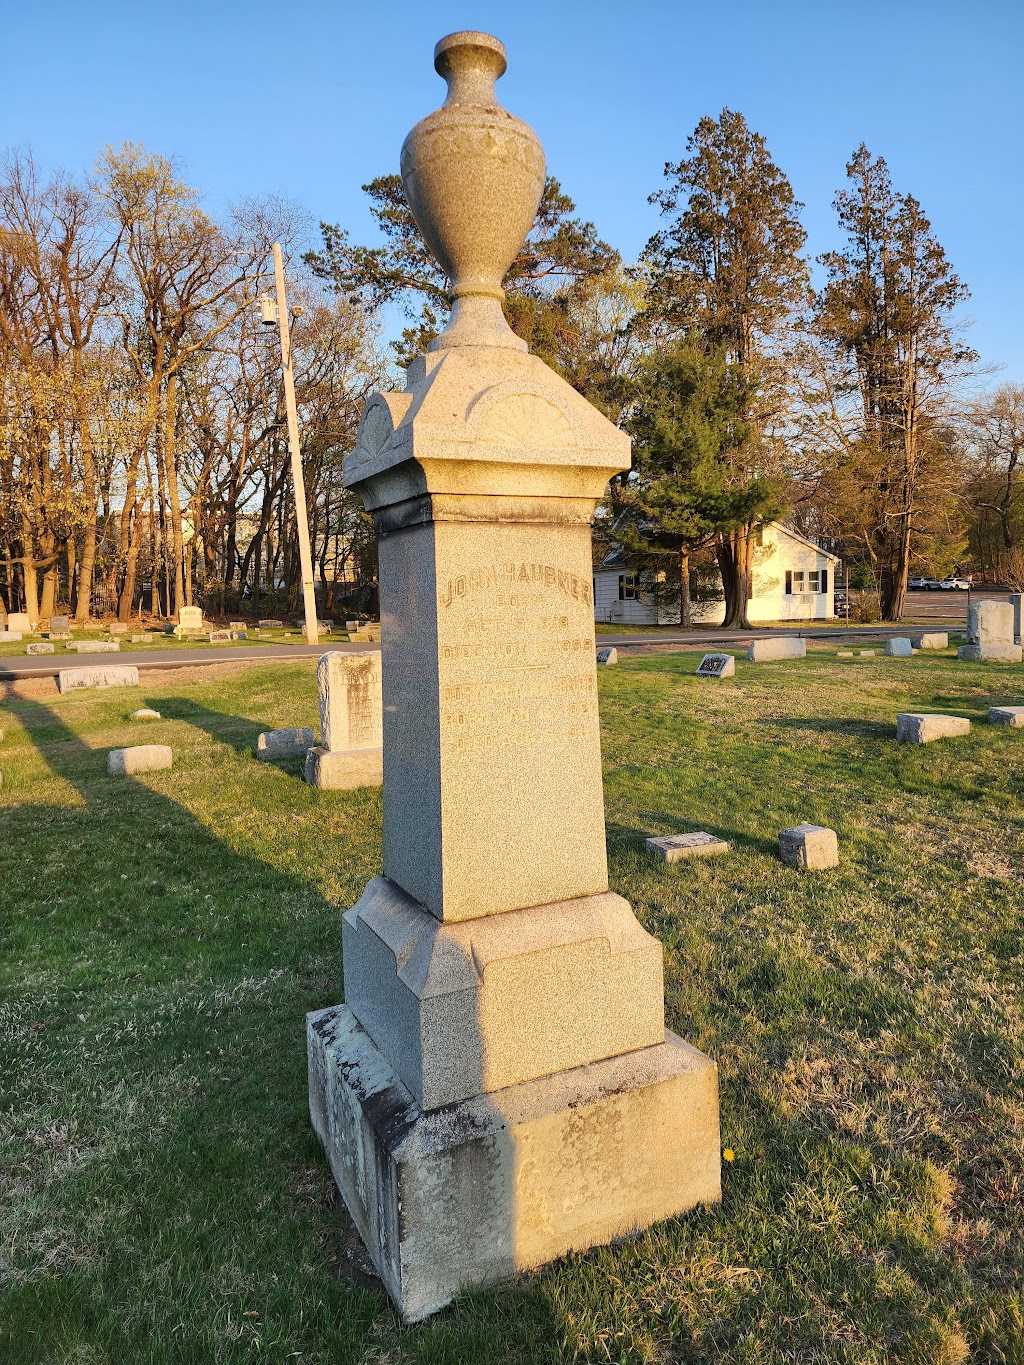 Wyckoff Reformed Church Cemetery | 580 Wyckoff Ave, Wyckoff, NJ 07481 | Phone: (201) 847-1889